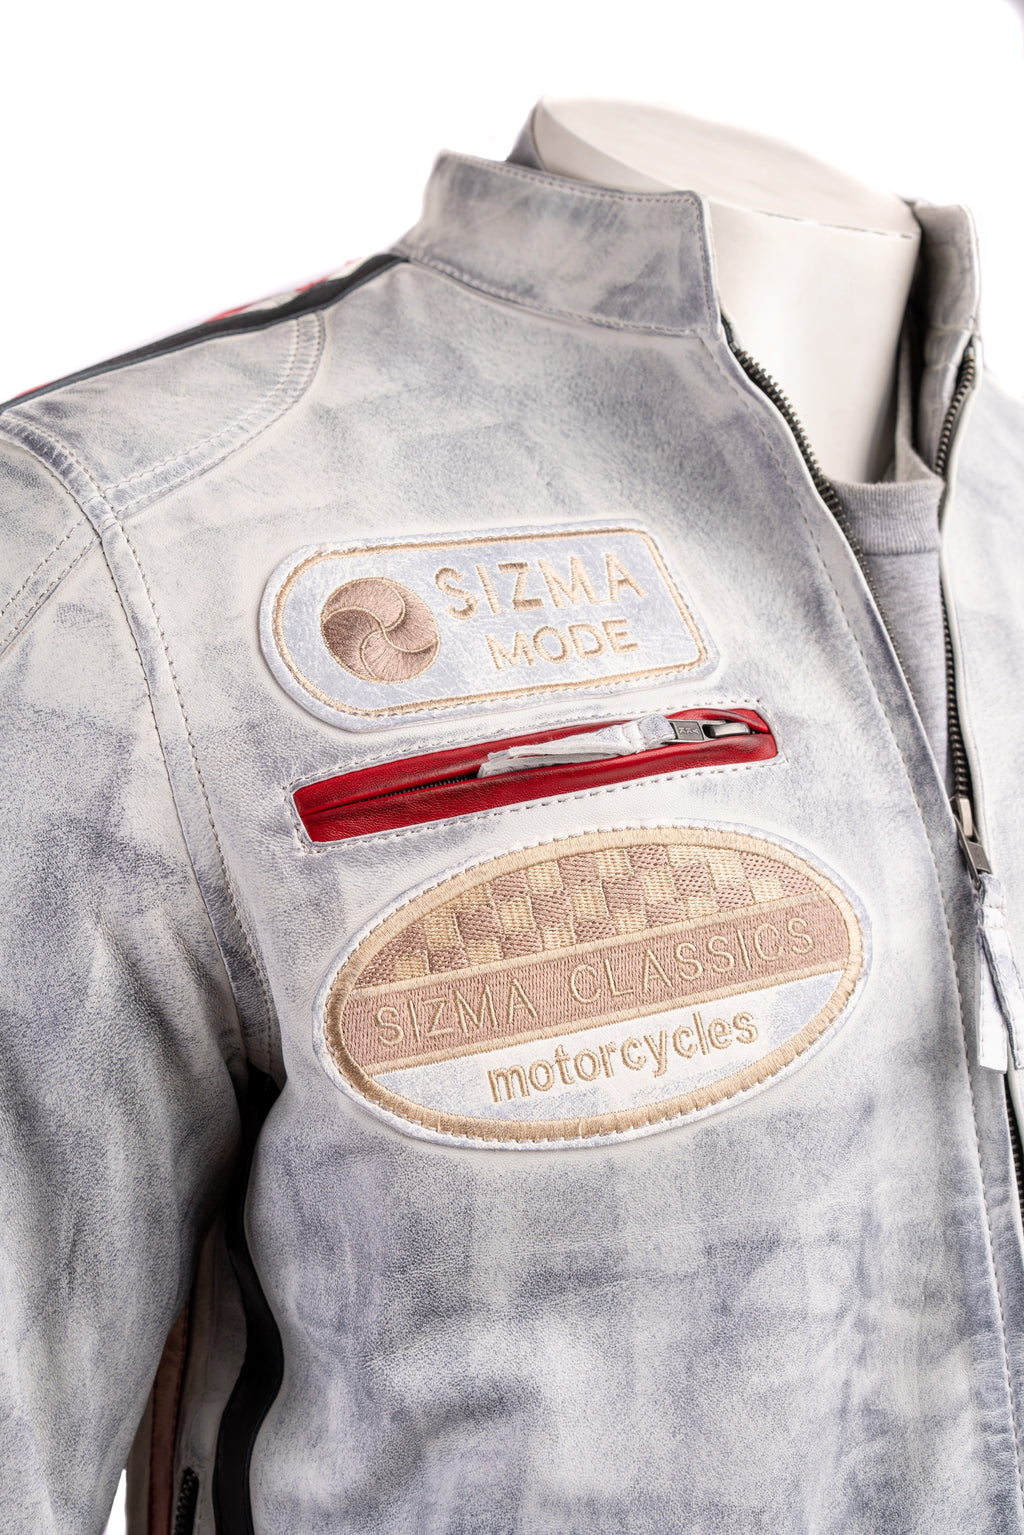 Men's Nappa Racing Biker Style Leather Jacket: Paolo